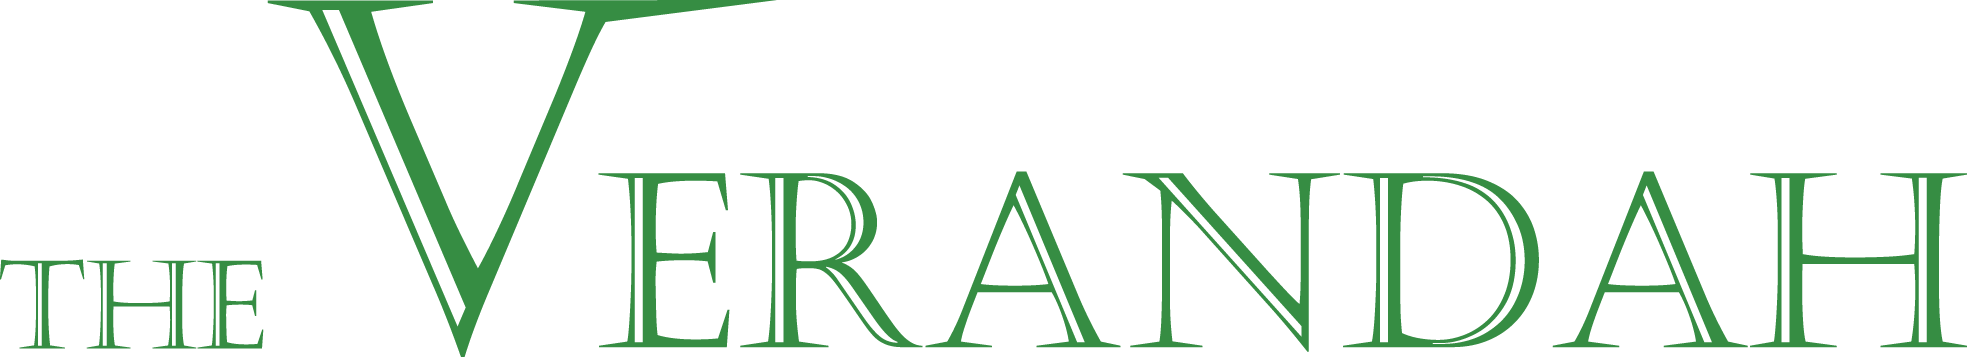 The Verandah official logo